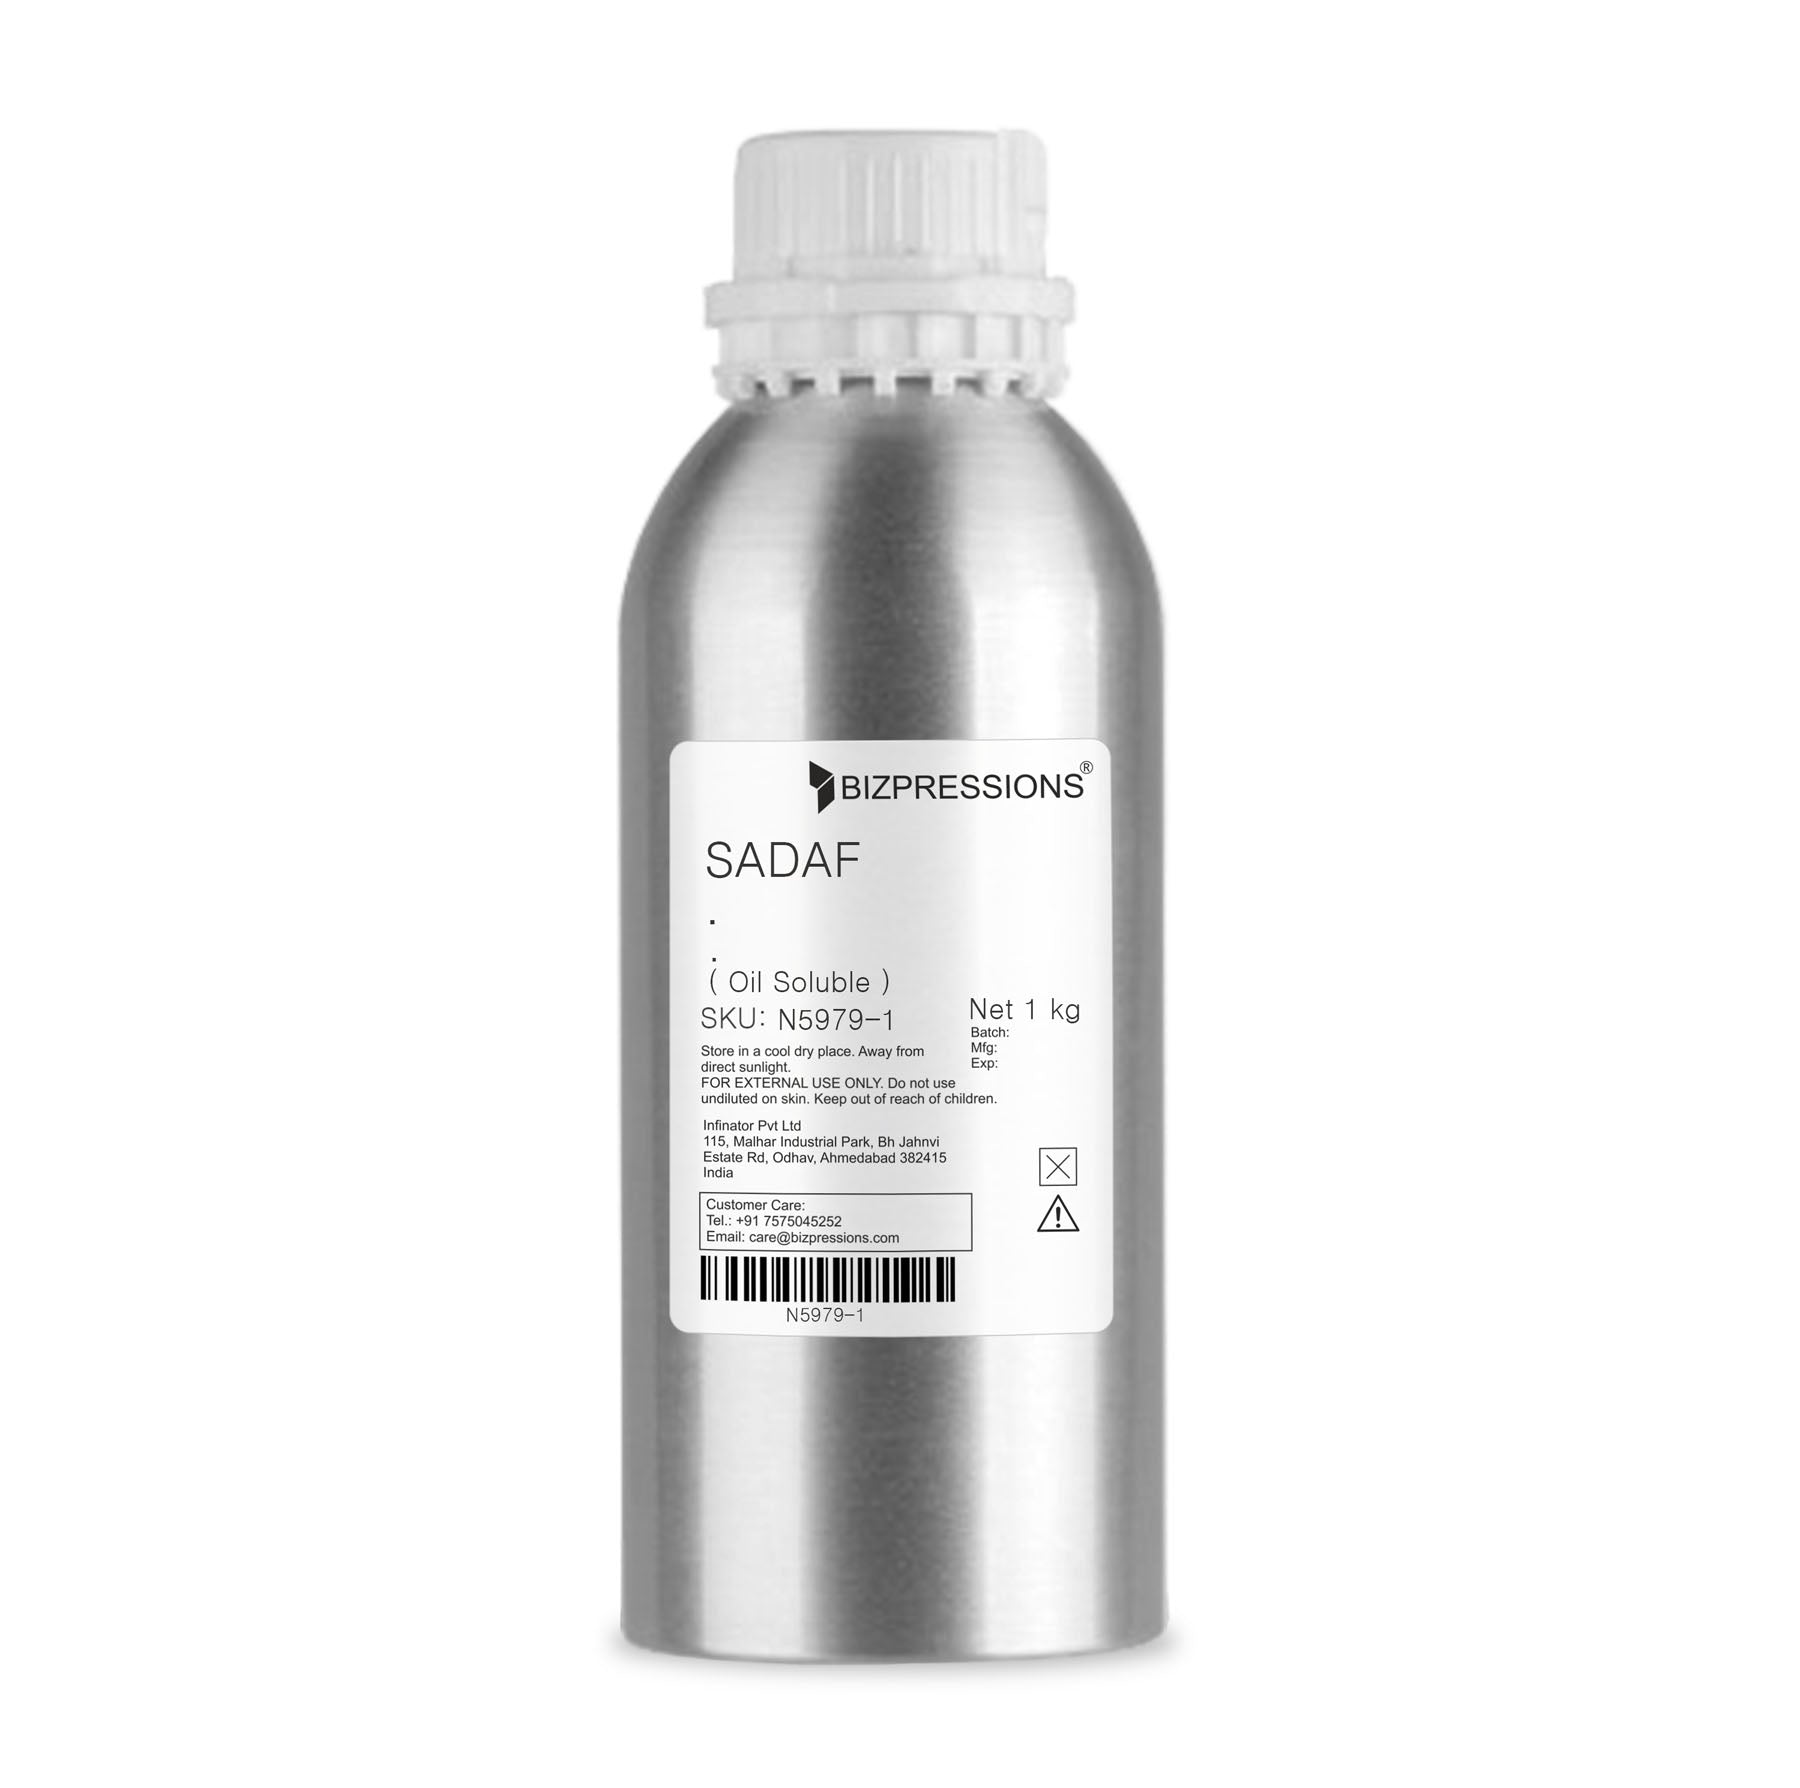 SADAF - Fragrance ( Oil Soluble ) - 1 kg